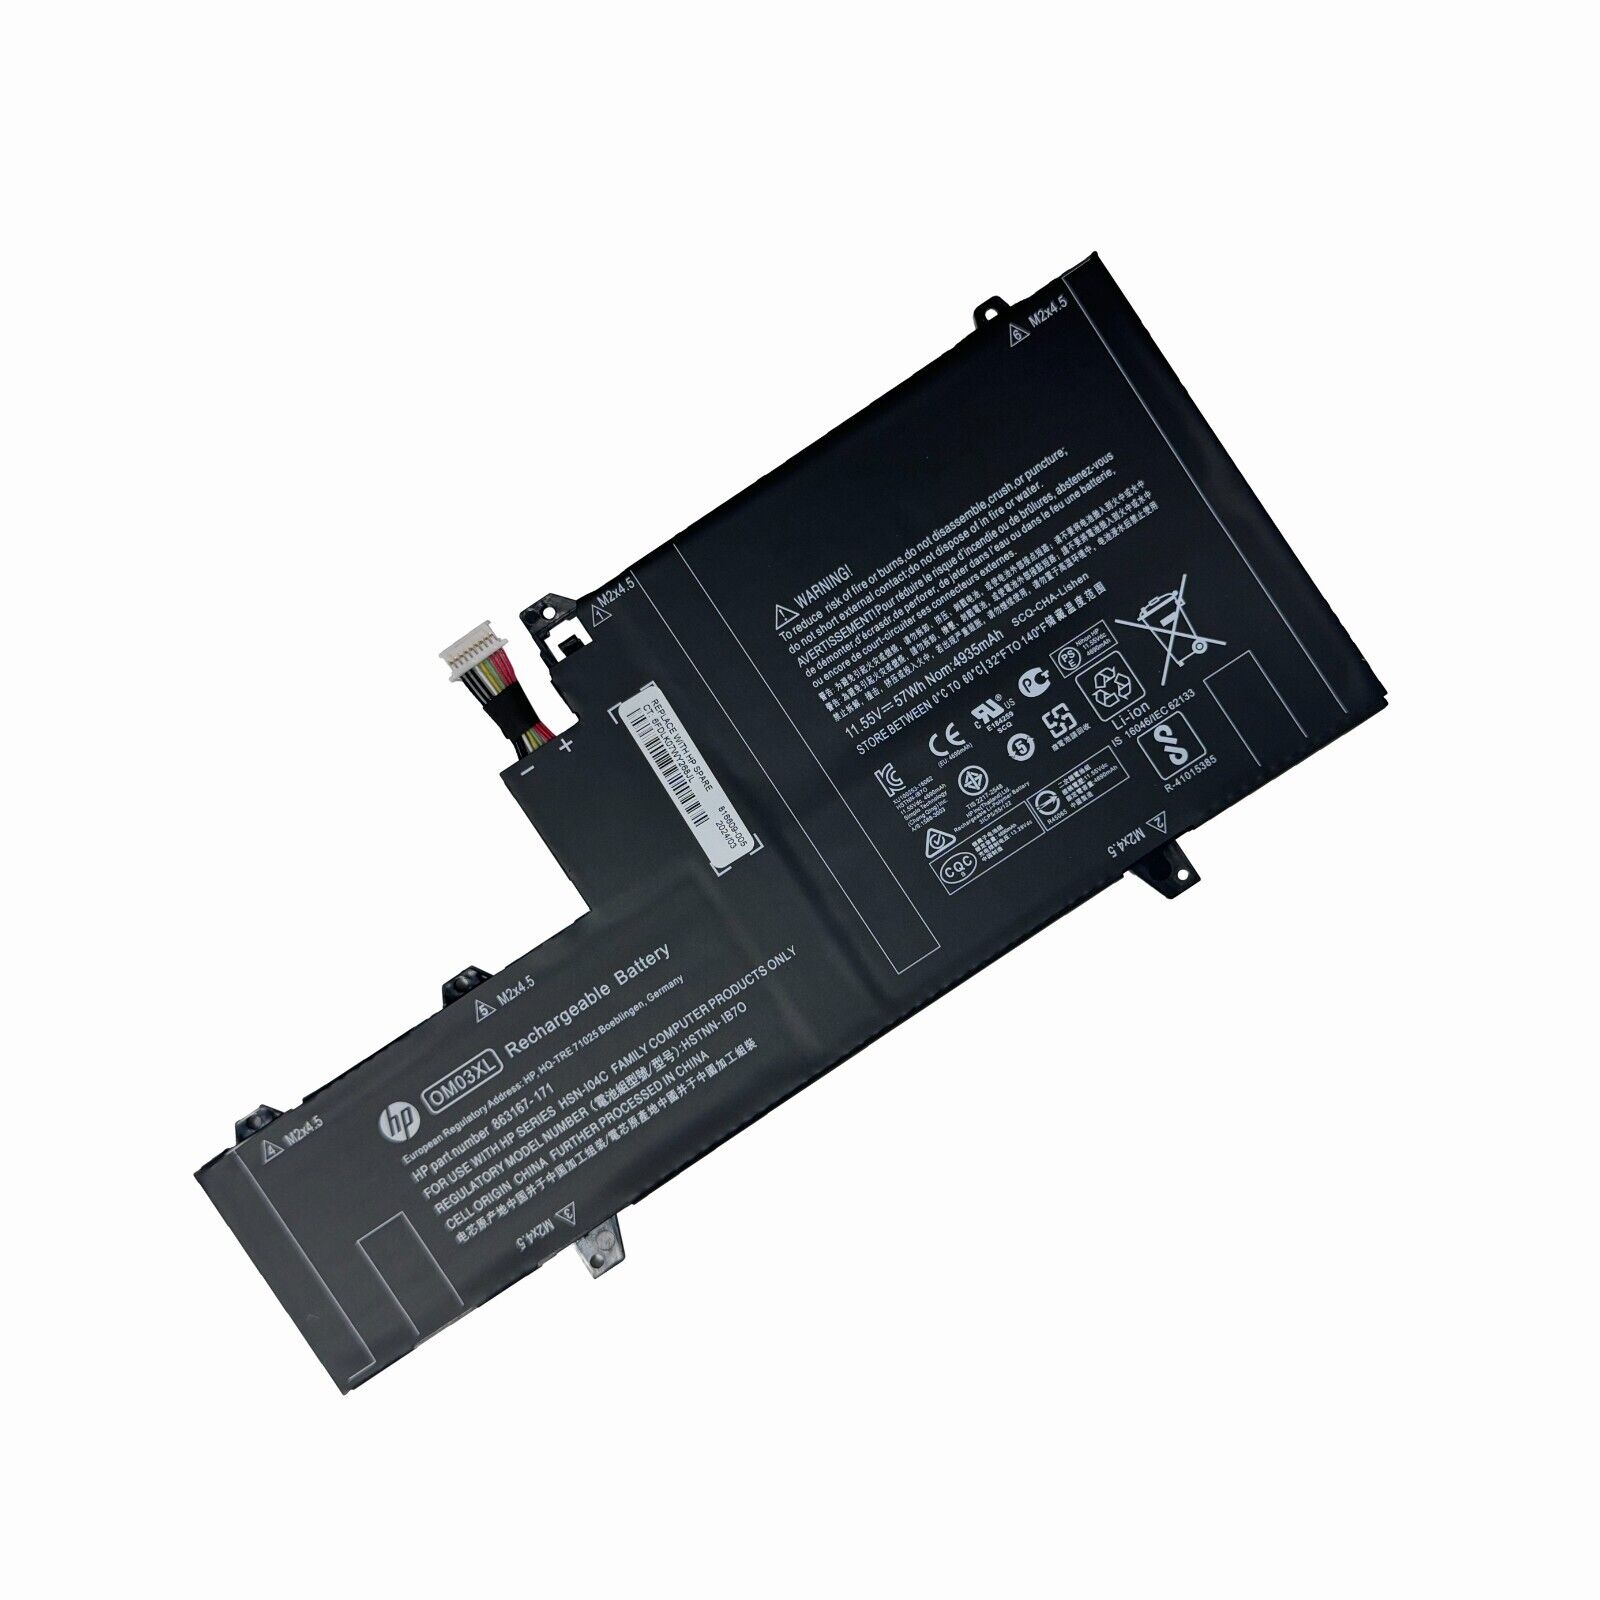 NEW Genuine OM03XL Battery For HP EliteBook X360 1030 G2 HSTNN-IB70 863280-855